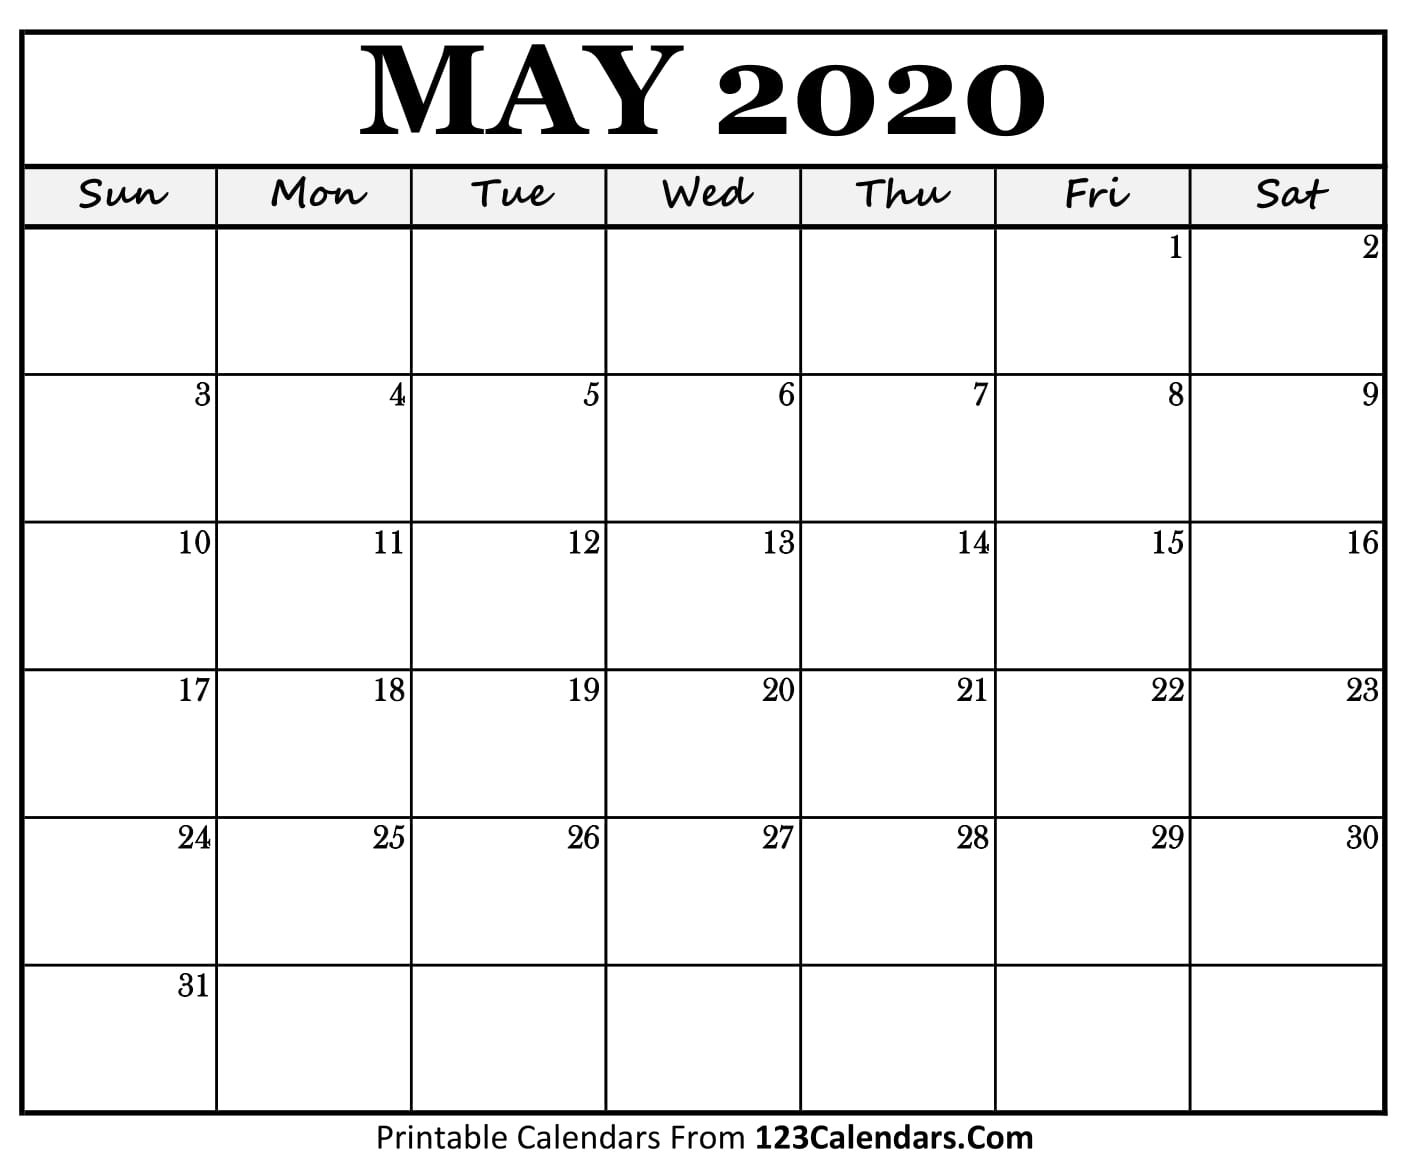 May 2020 Printable Calendar | 123Calendars